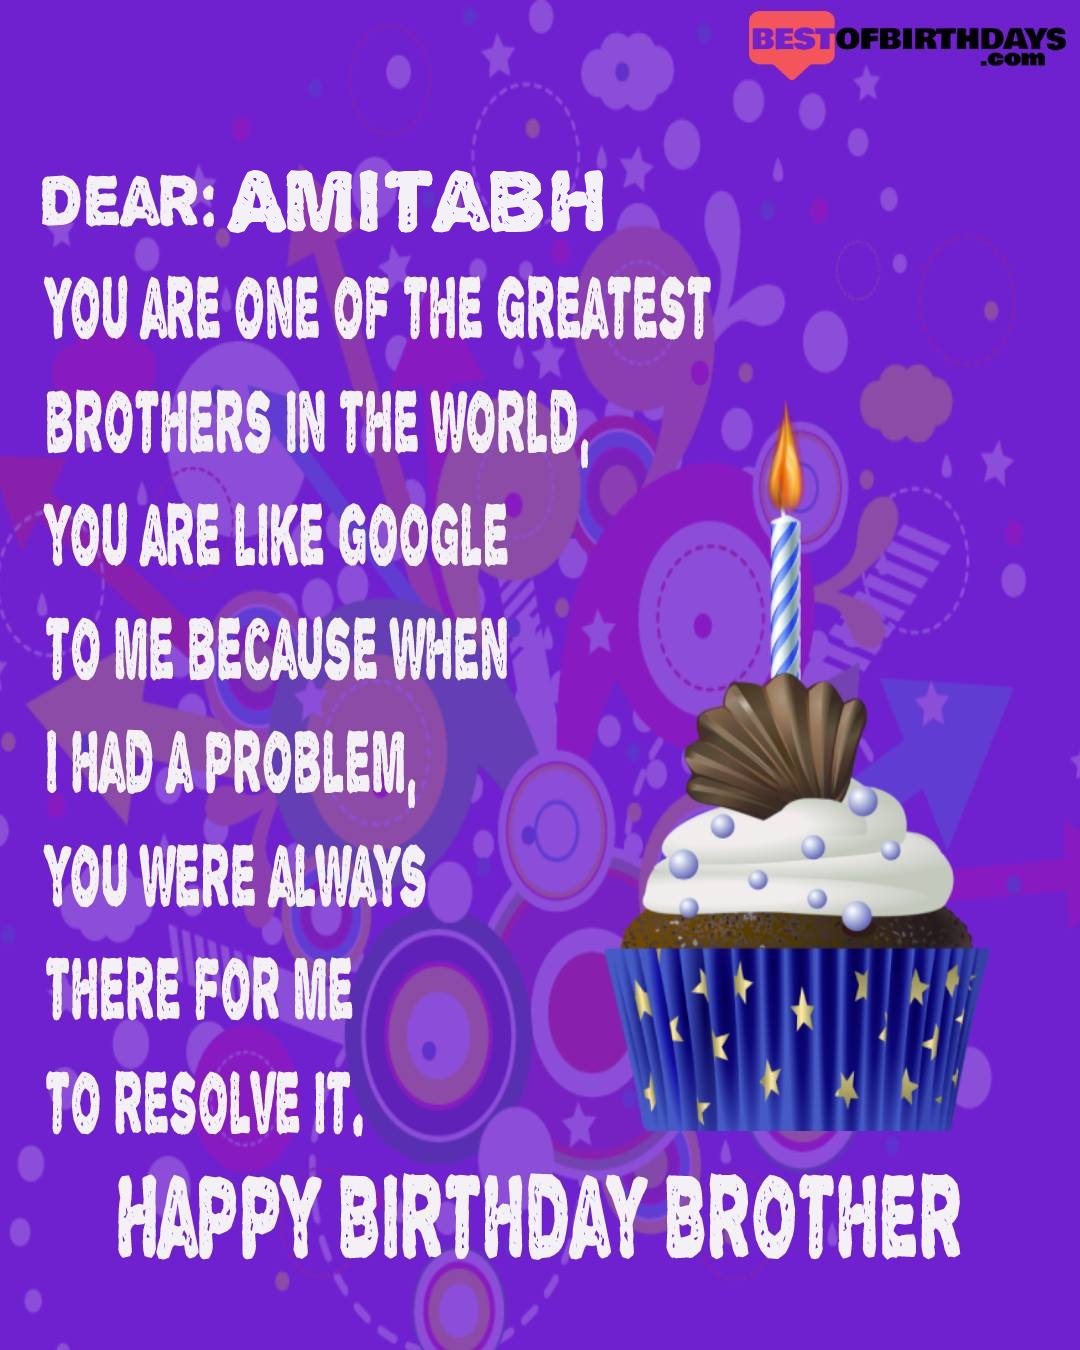 Happy birthday amitabh bhai brother bro